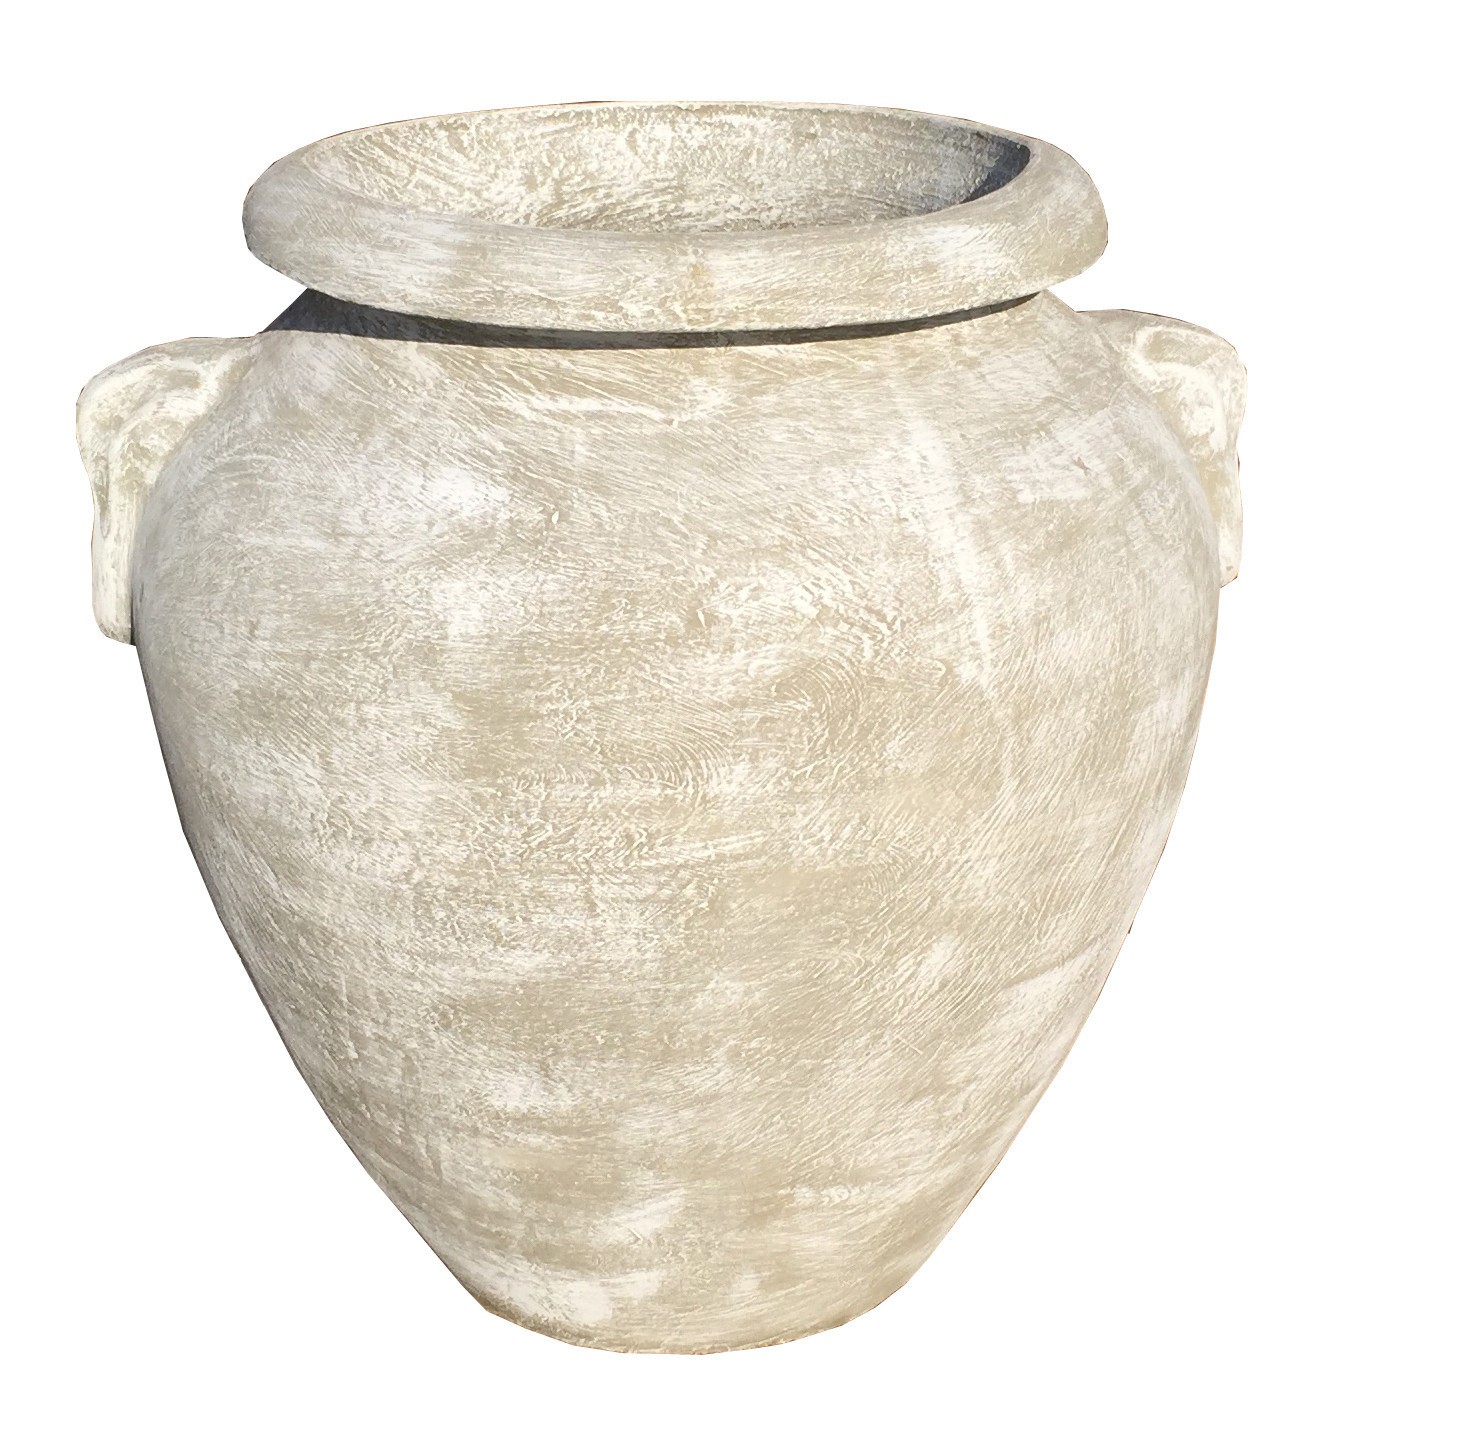 Amphora Urn Whitewash Finish - H870mm x W700mm - 57kg